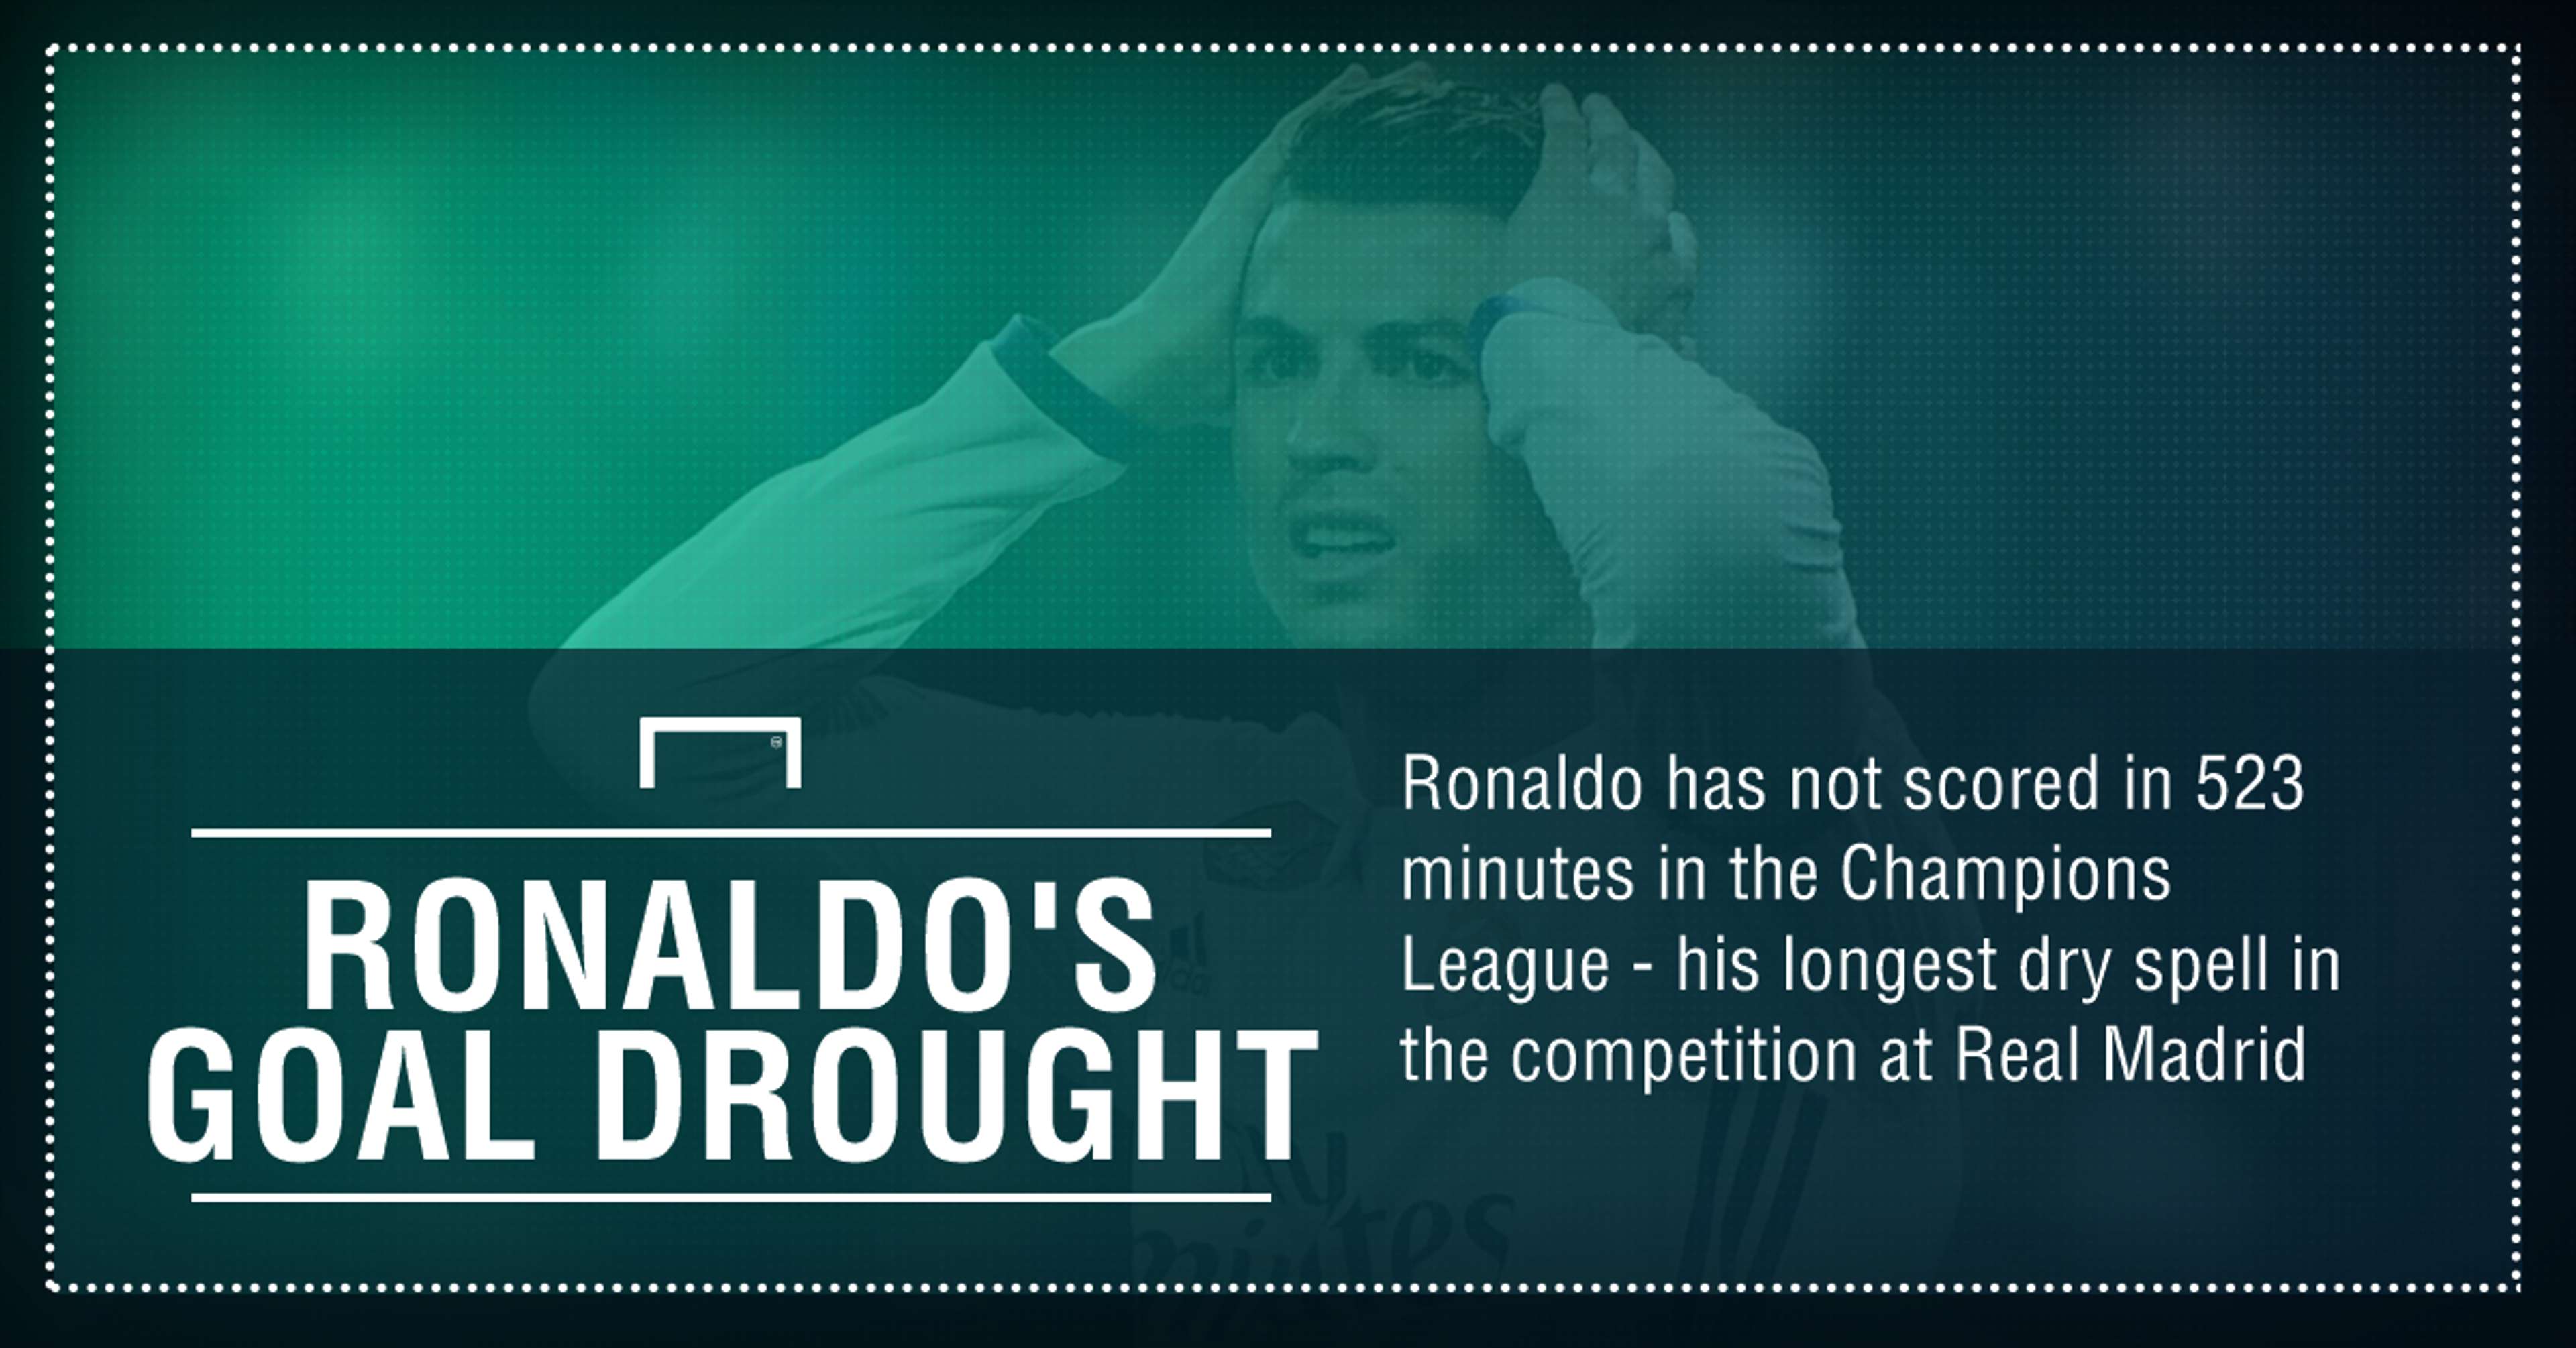 GFX Info Cristiano Ronaldo Champions League goal drought 523 minutes